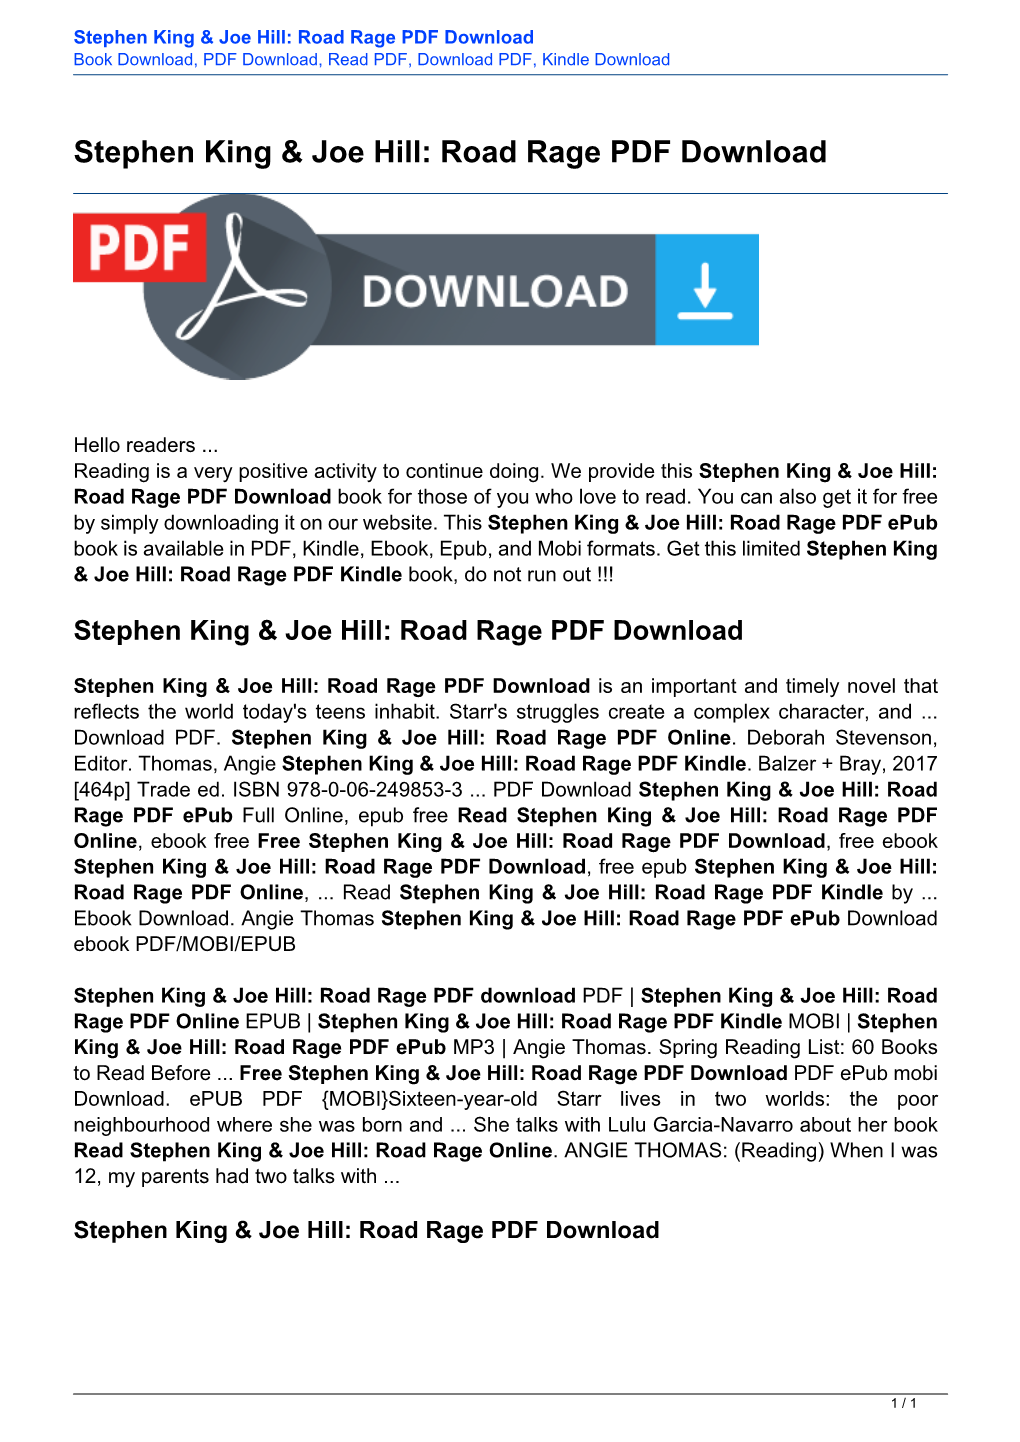 Stephen King & Joe Hill: Road Rage PDF Download